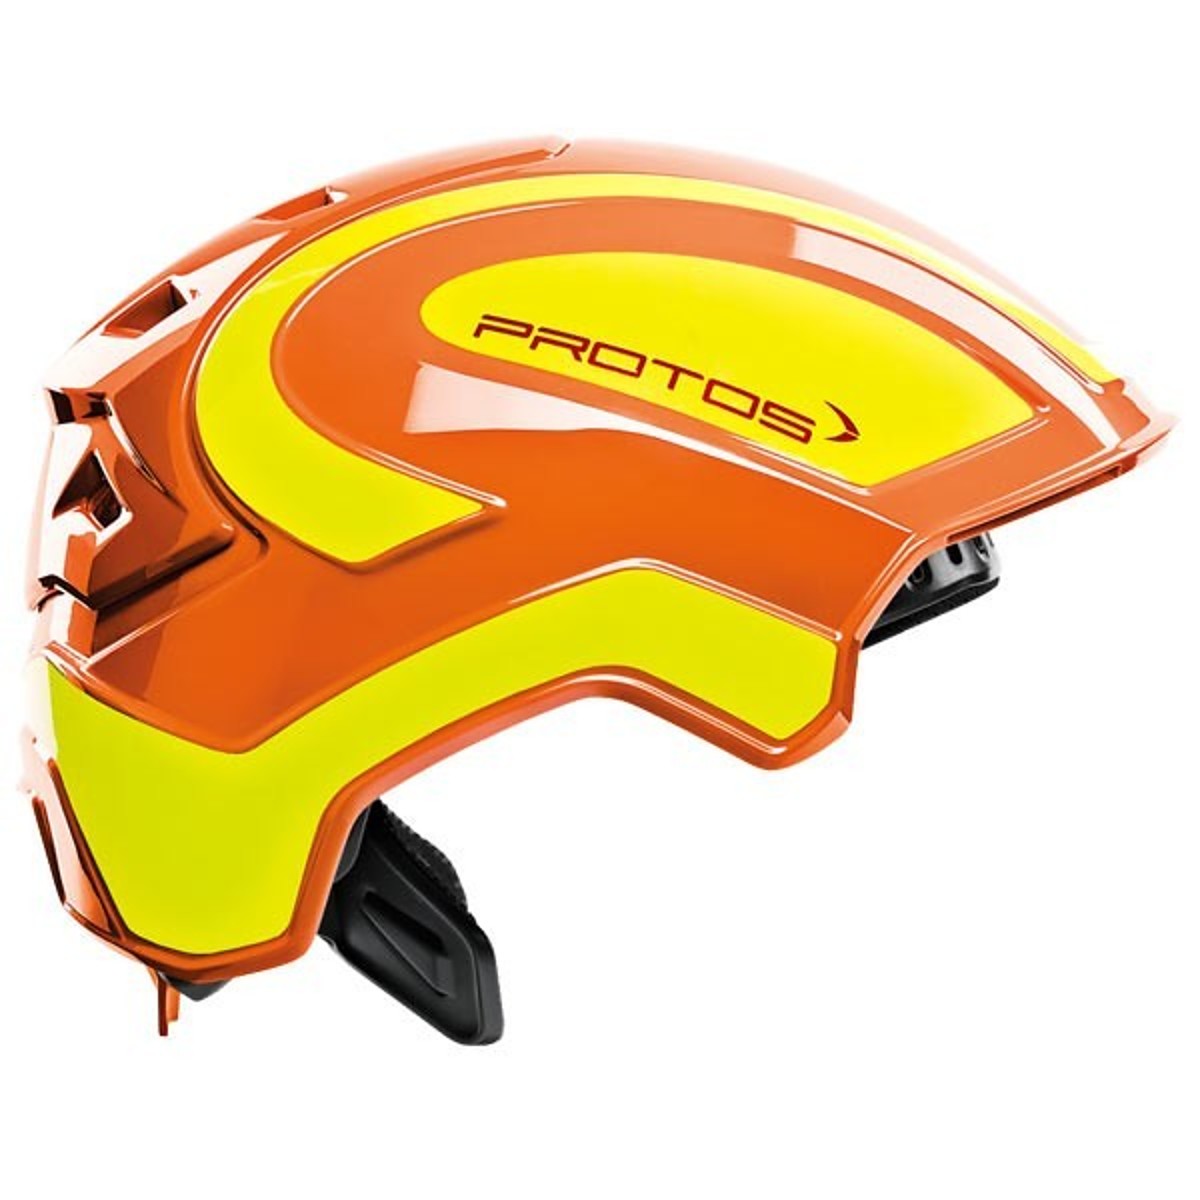 Protos integral safety helmet